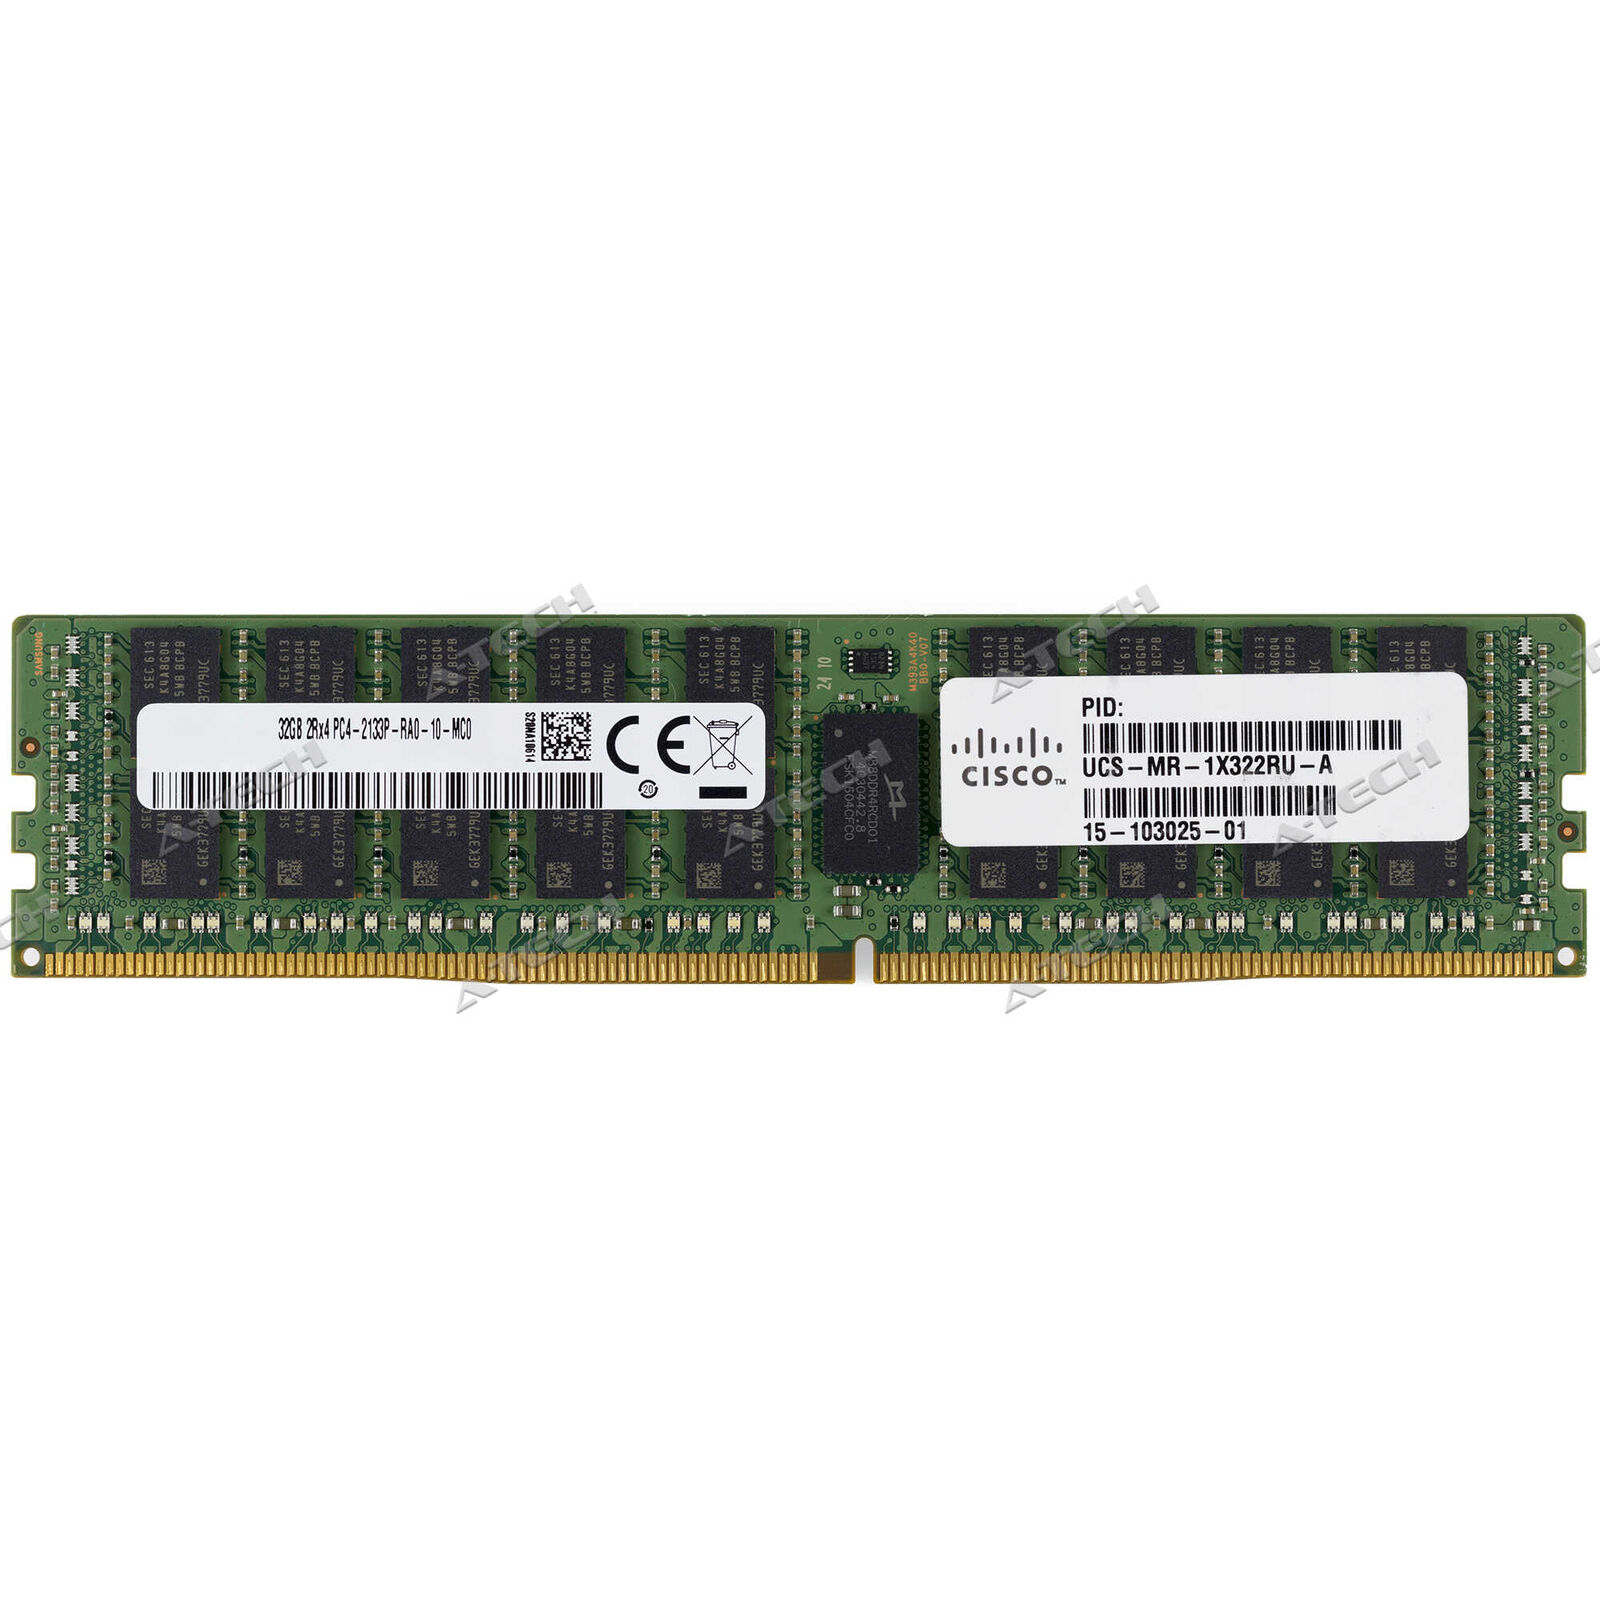 Cisco 32GB DDR4-2133 REG RDIMM UCS-MR-1X322RU-A 15-103025-01 Server Memory RAM